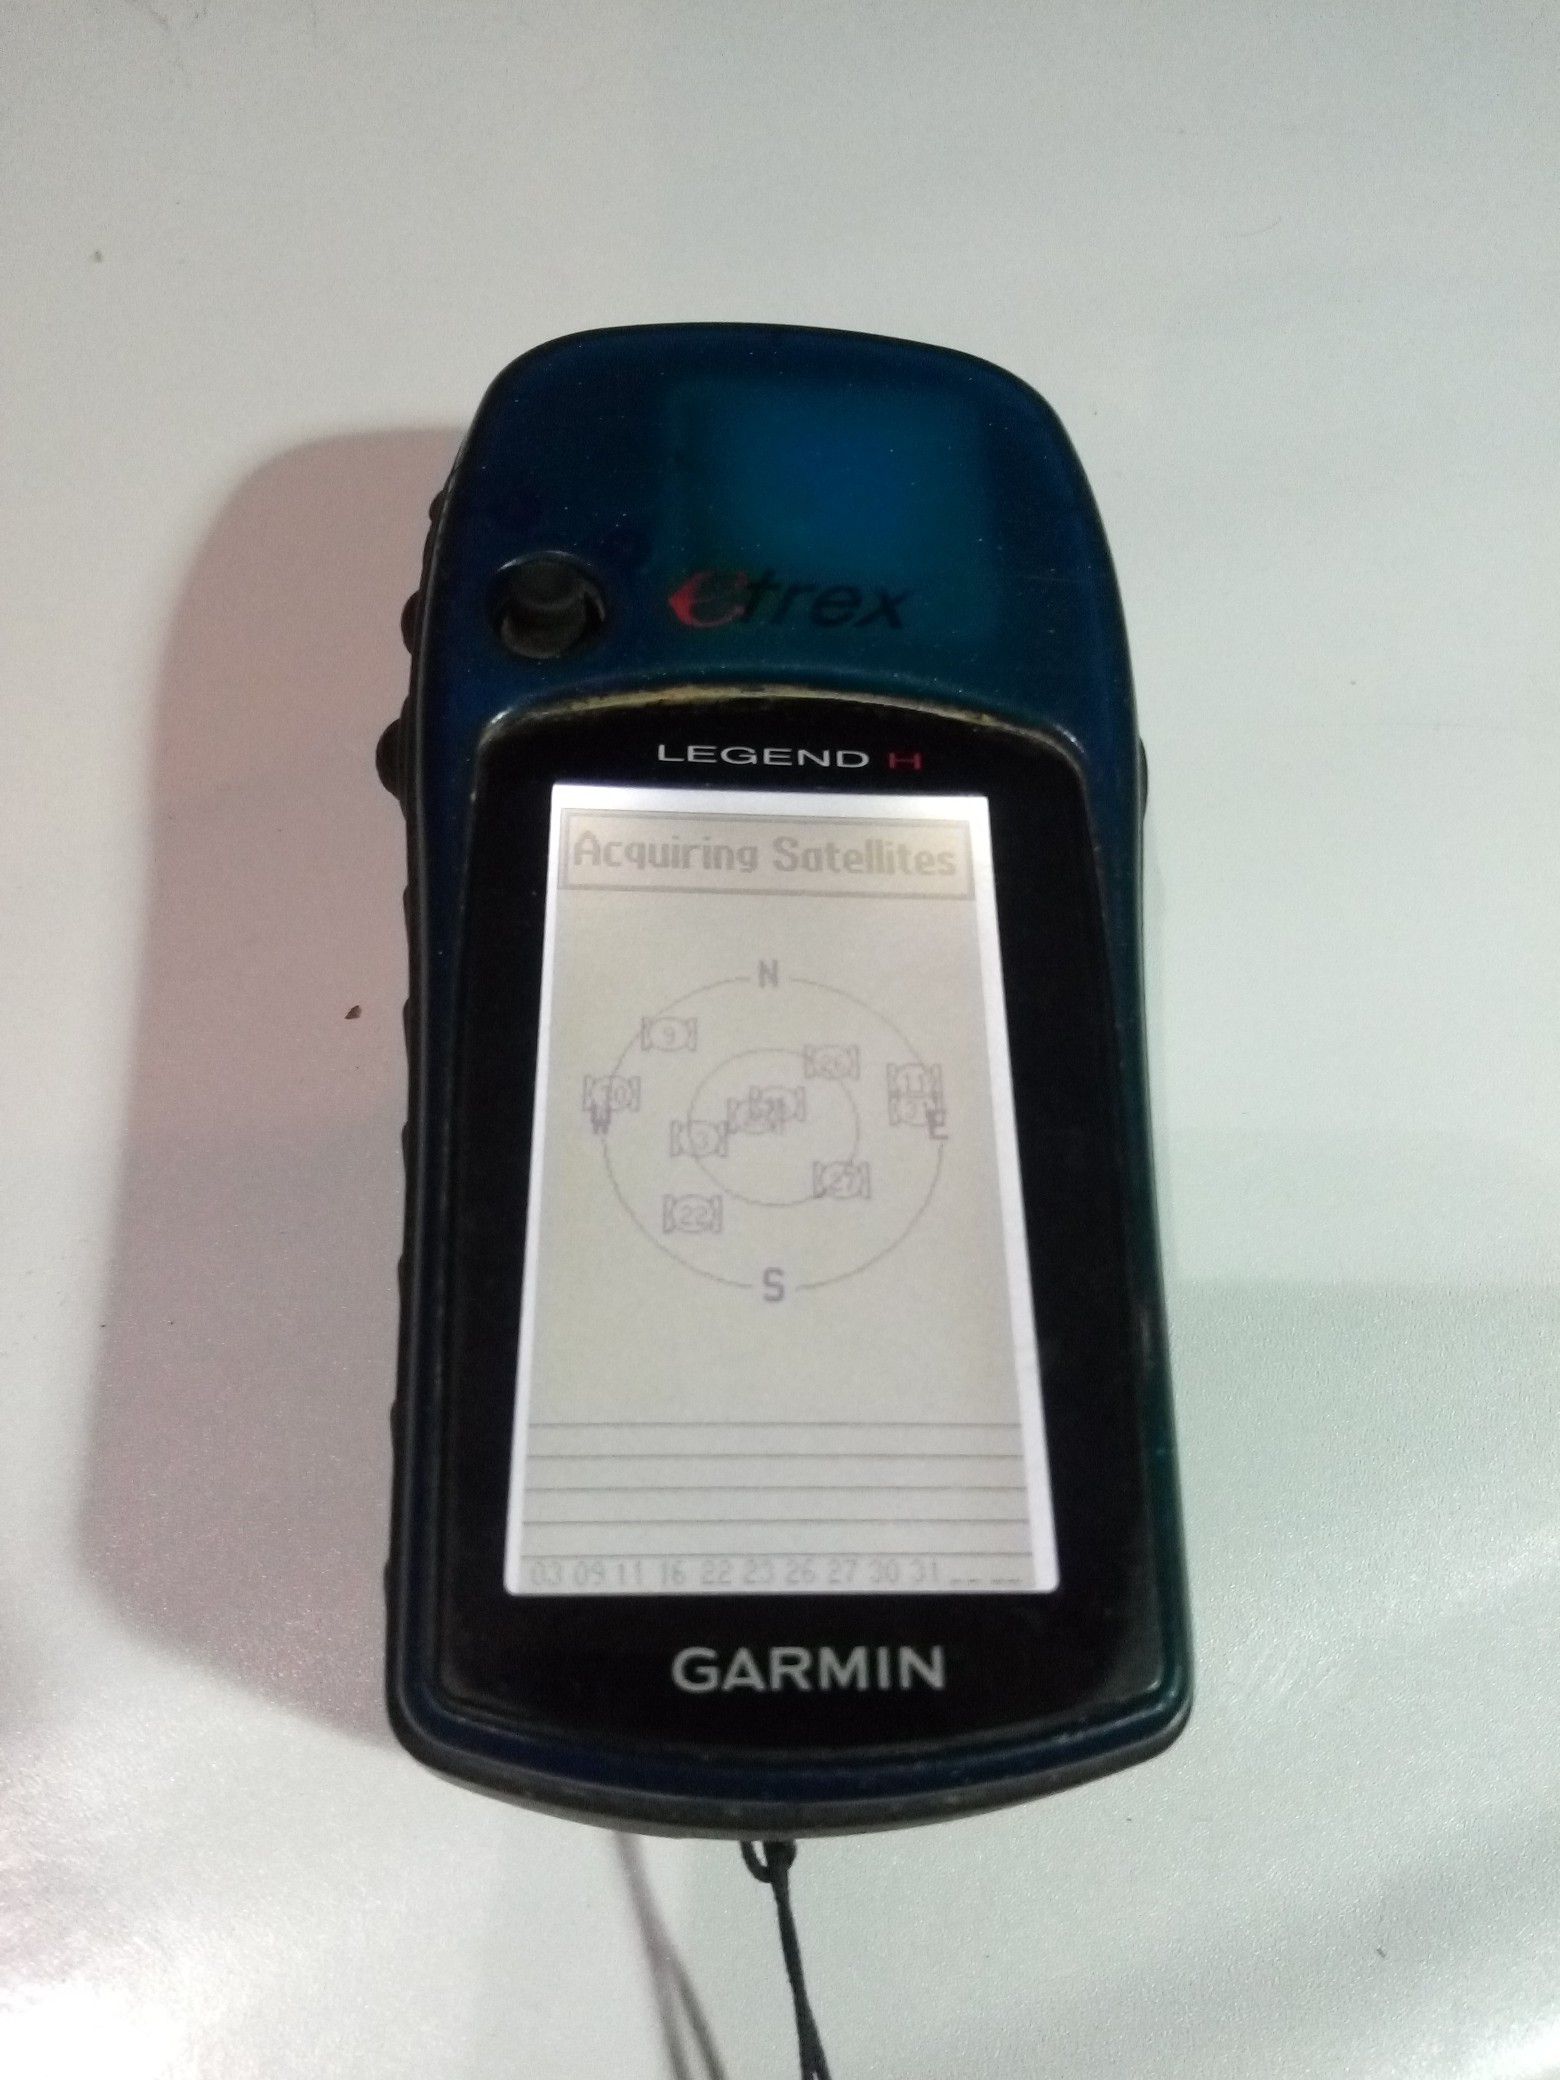 Garmin Legend GPS